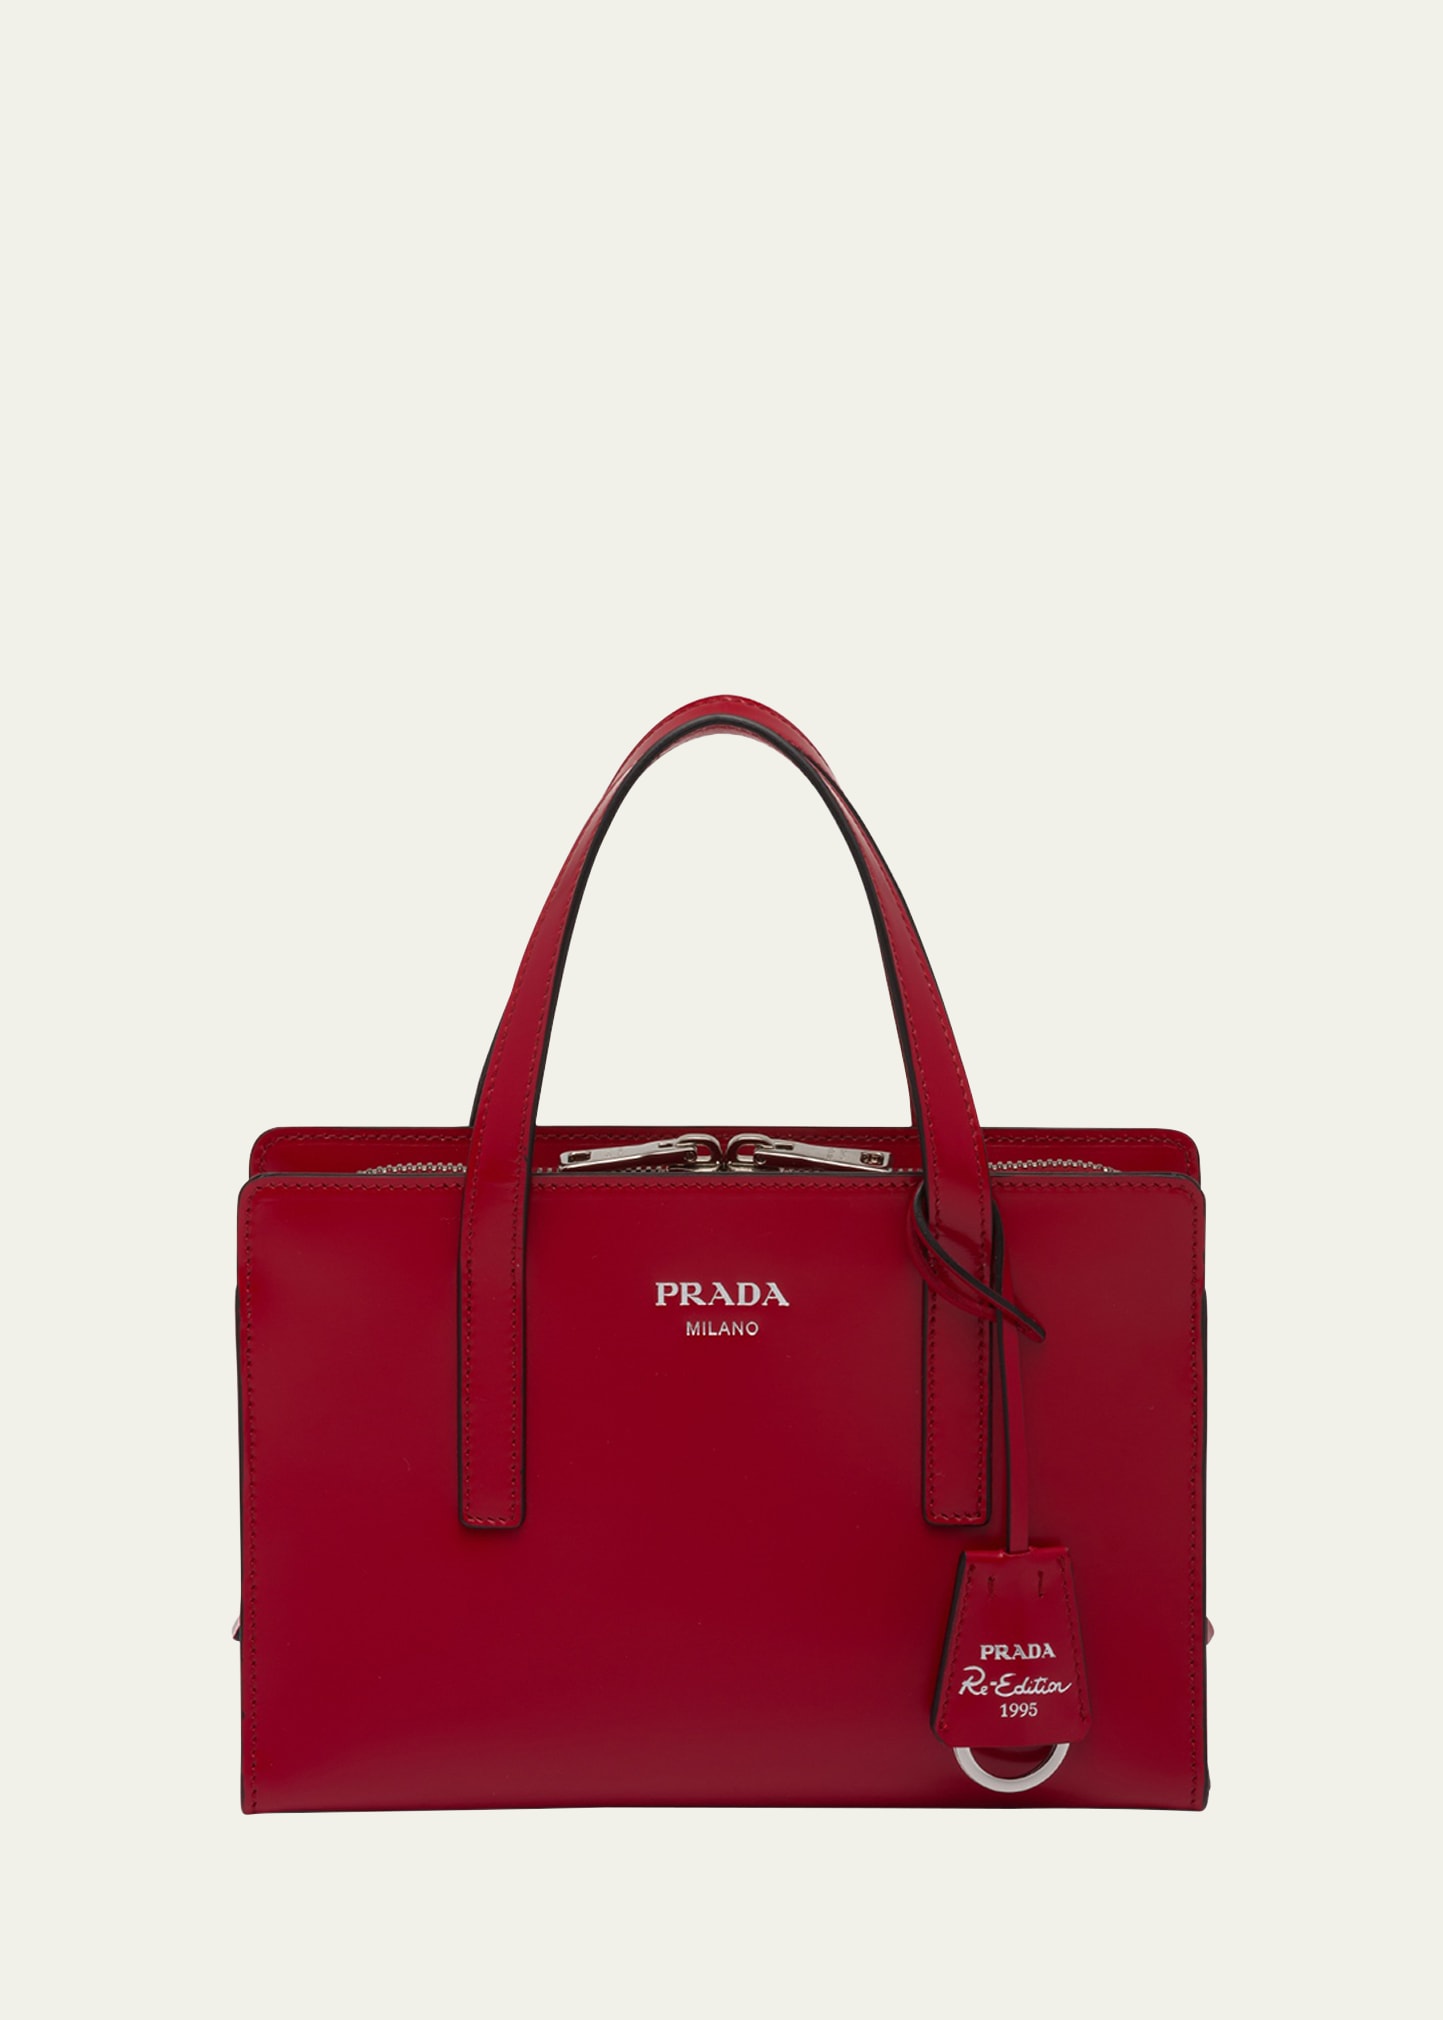 Prada Re-edition 2005 Saffiano Leather Bag In Alabastro